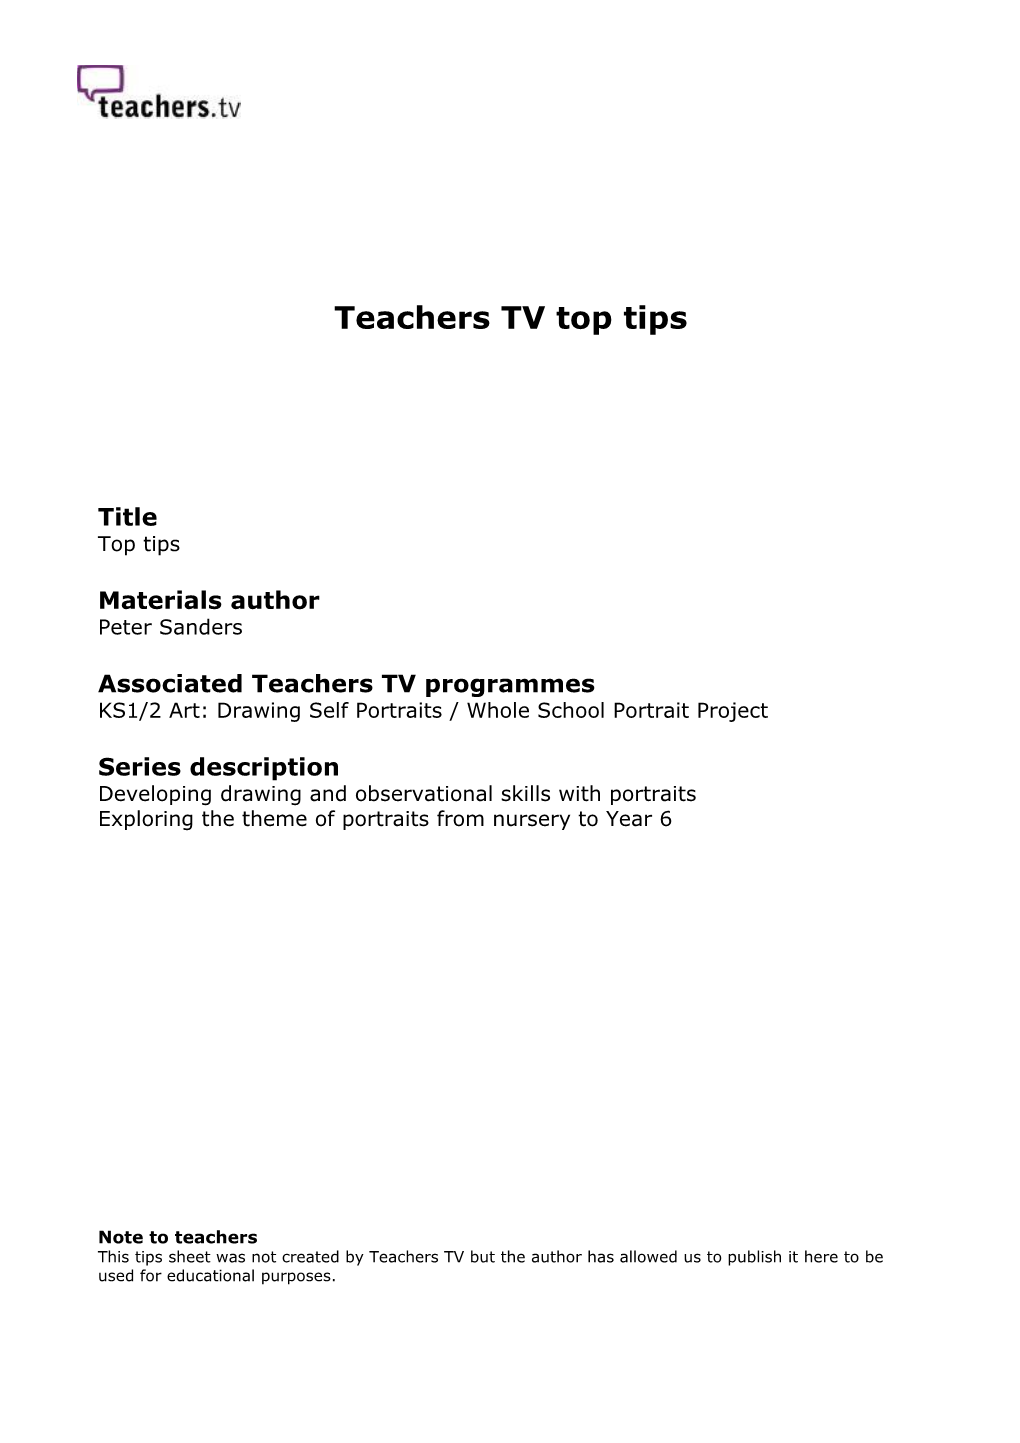 Teachers TV Top Tips